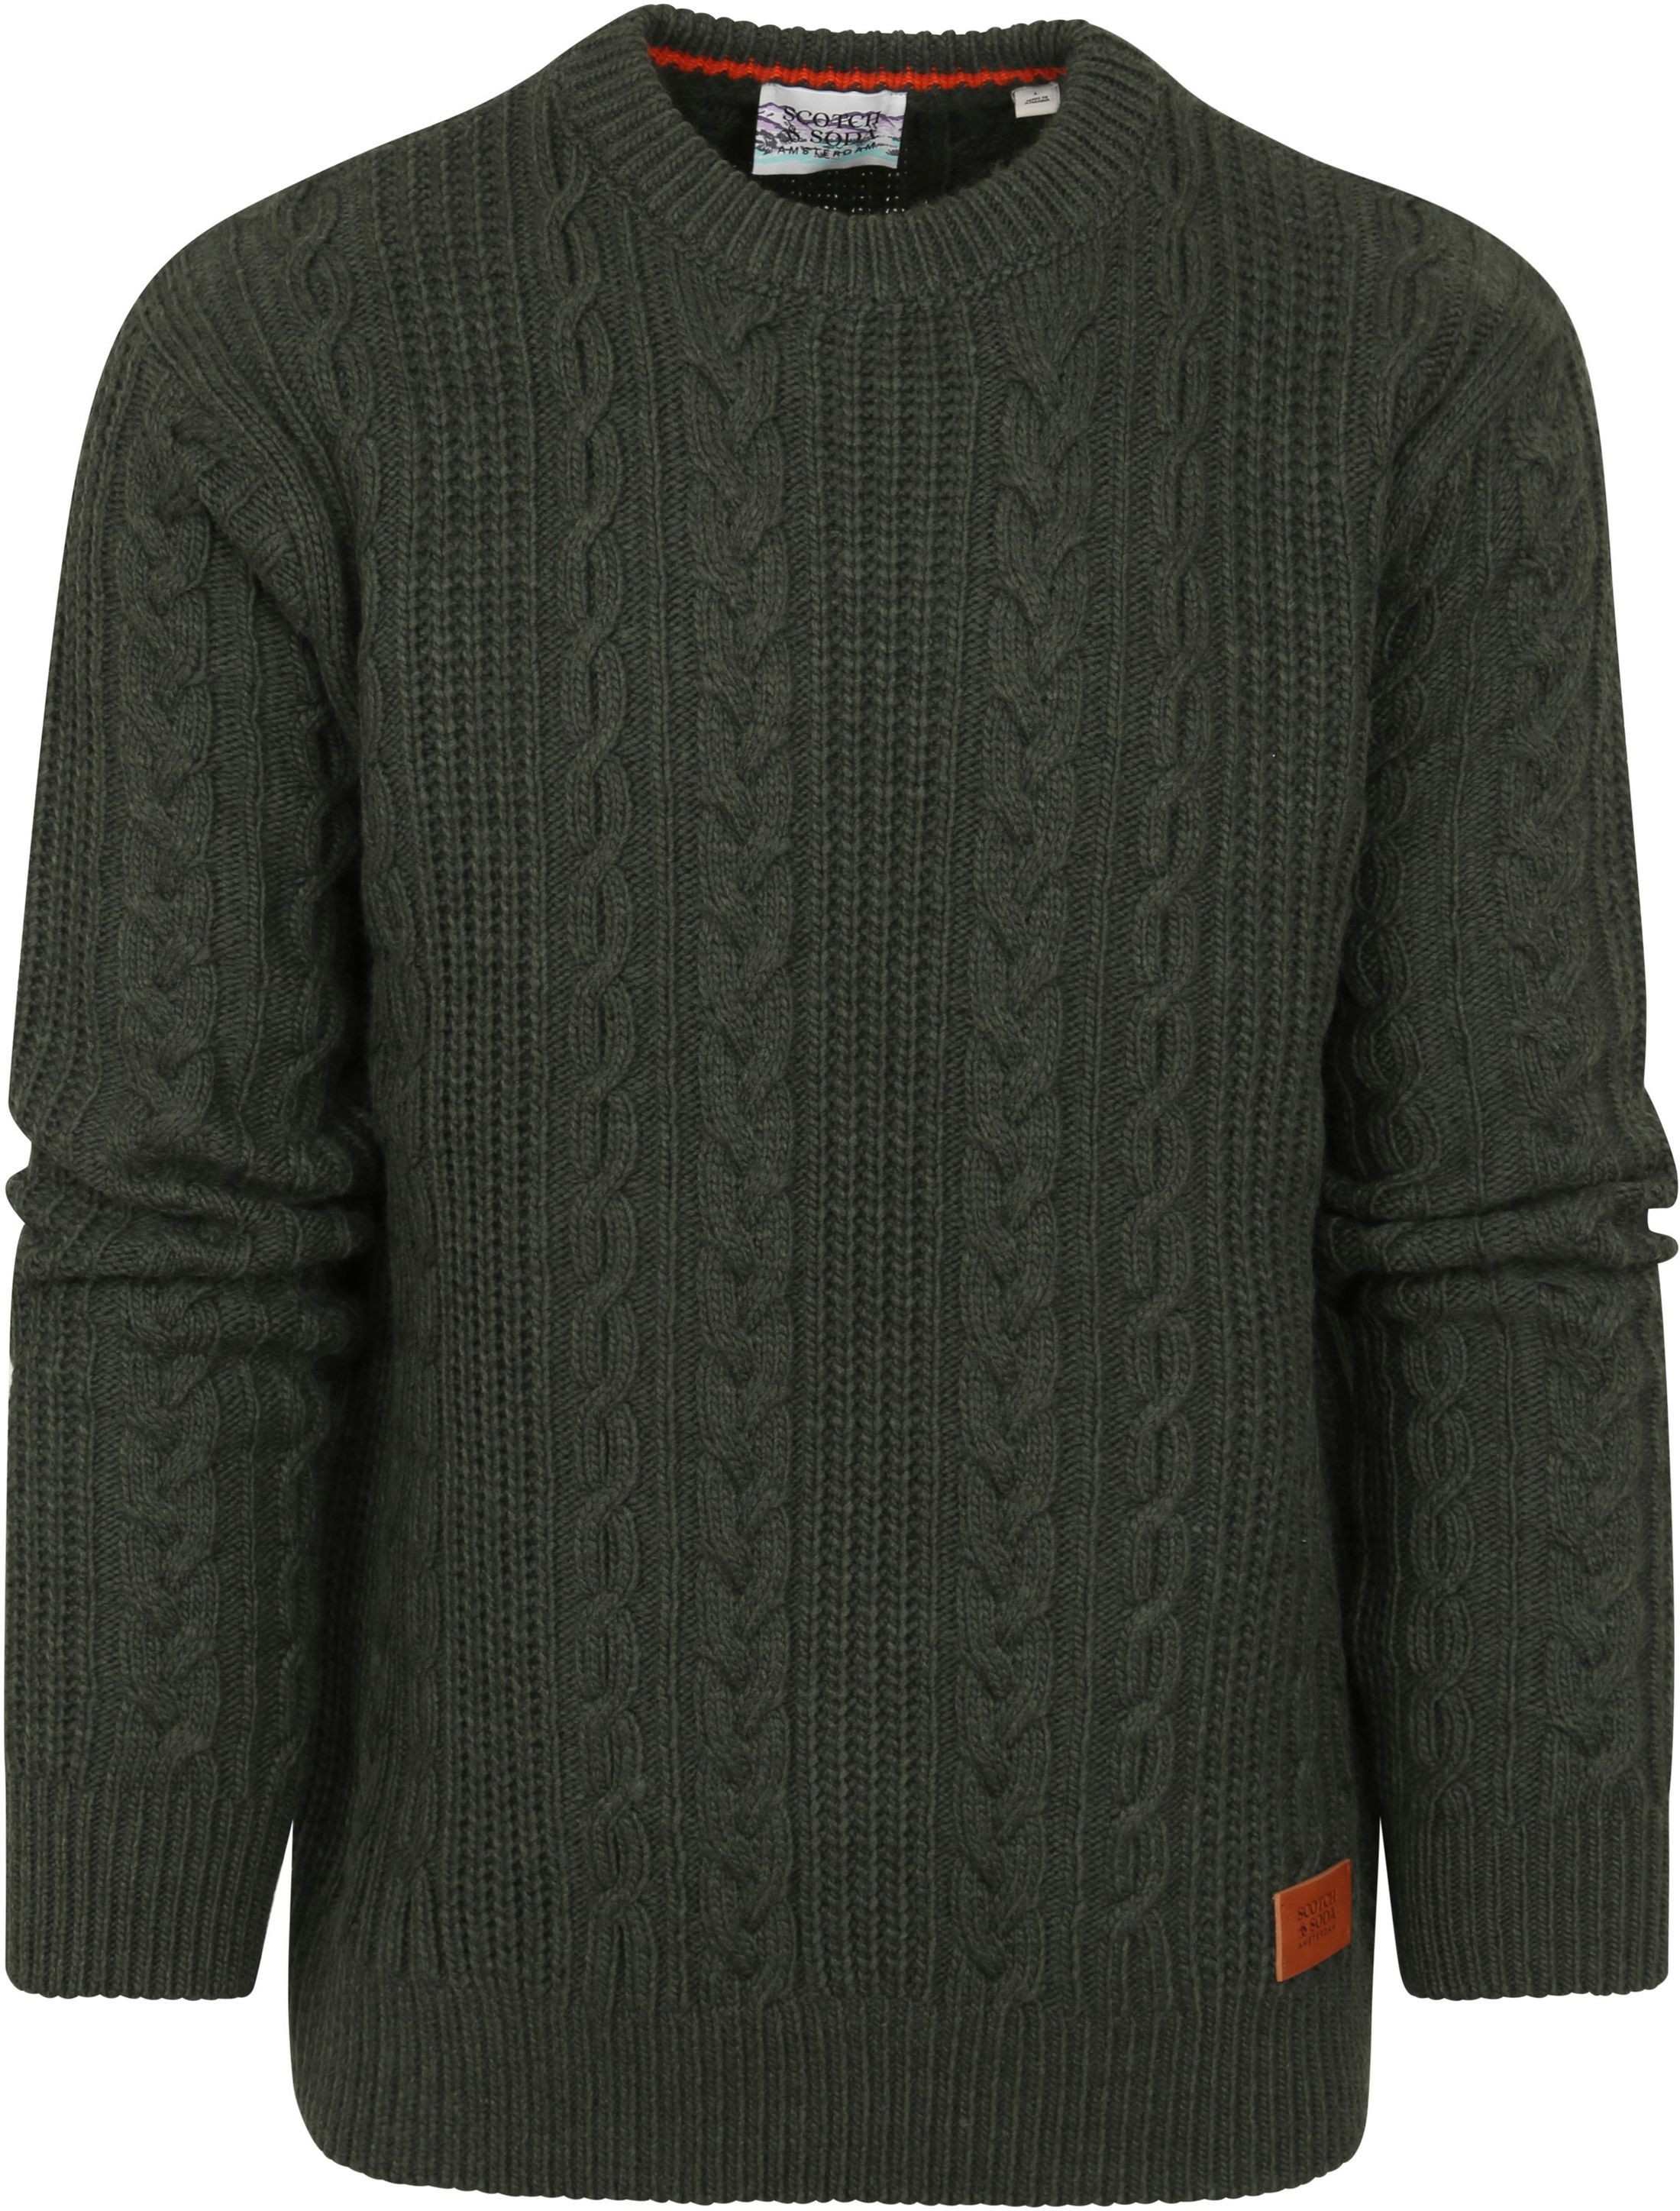 Scotch and Soda Knit Sweater Mix Wool Dark Dark Green Green size XL